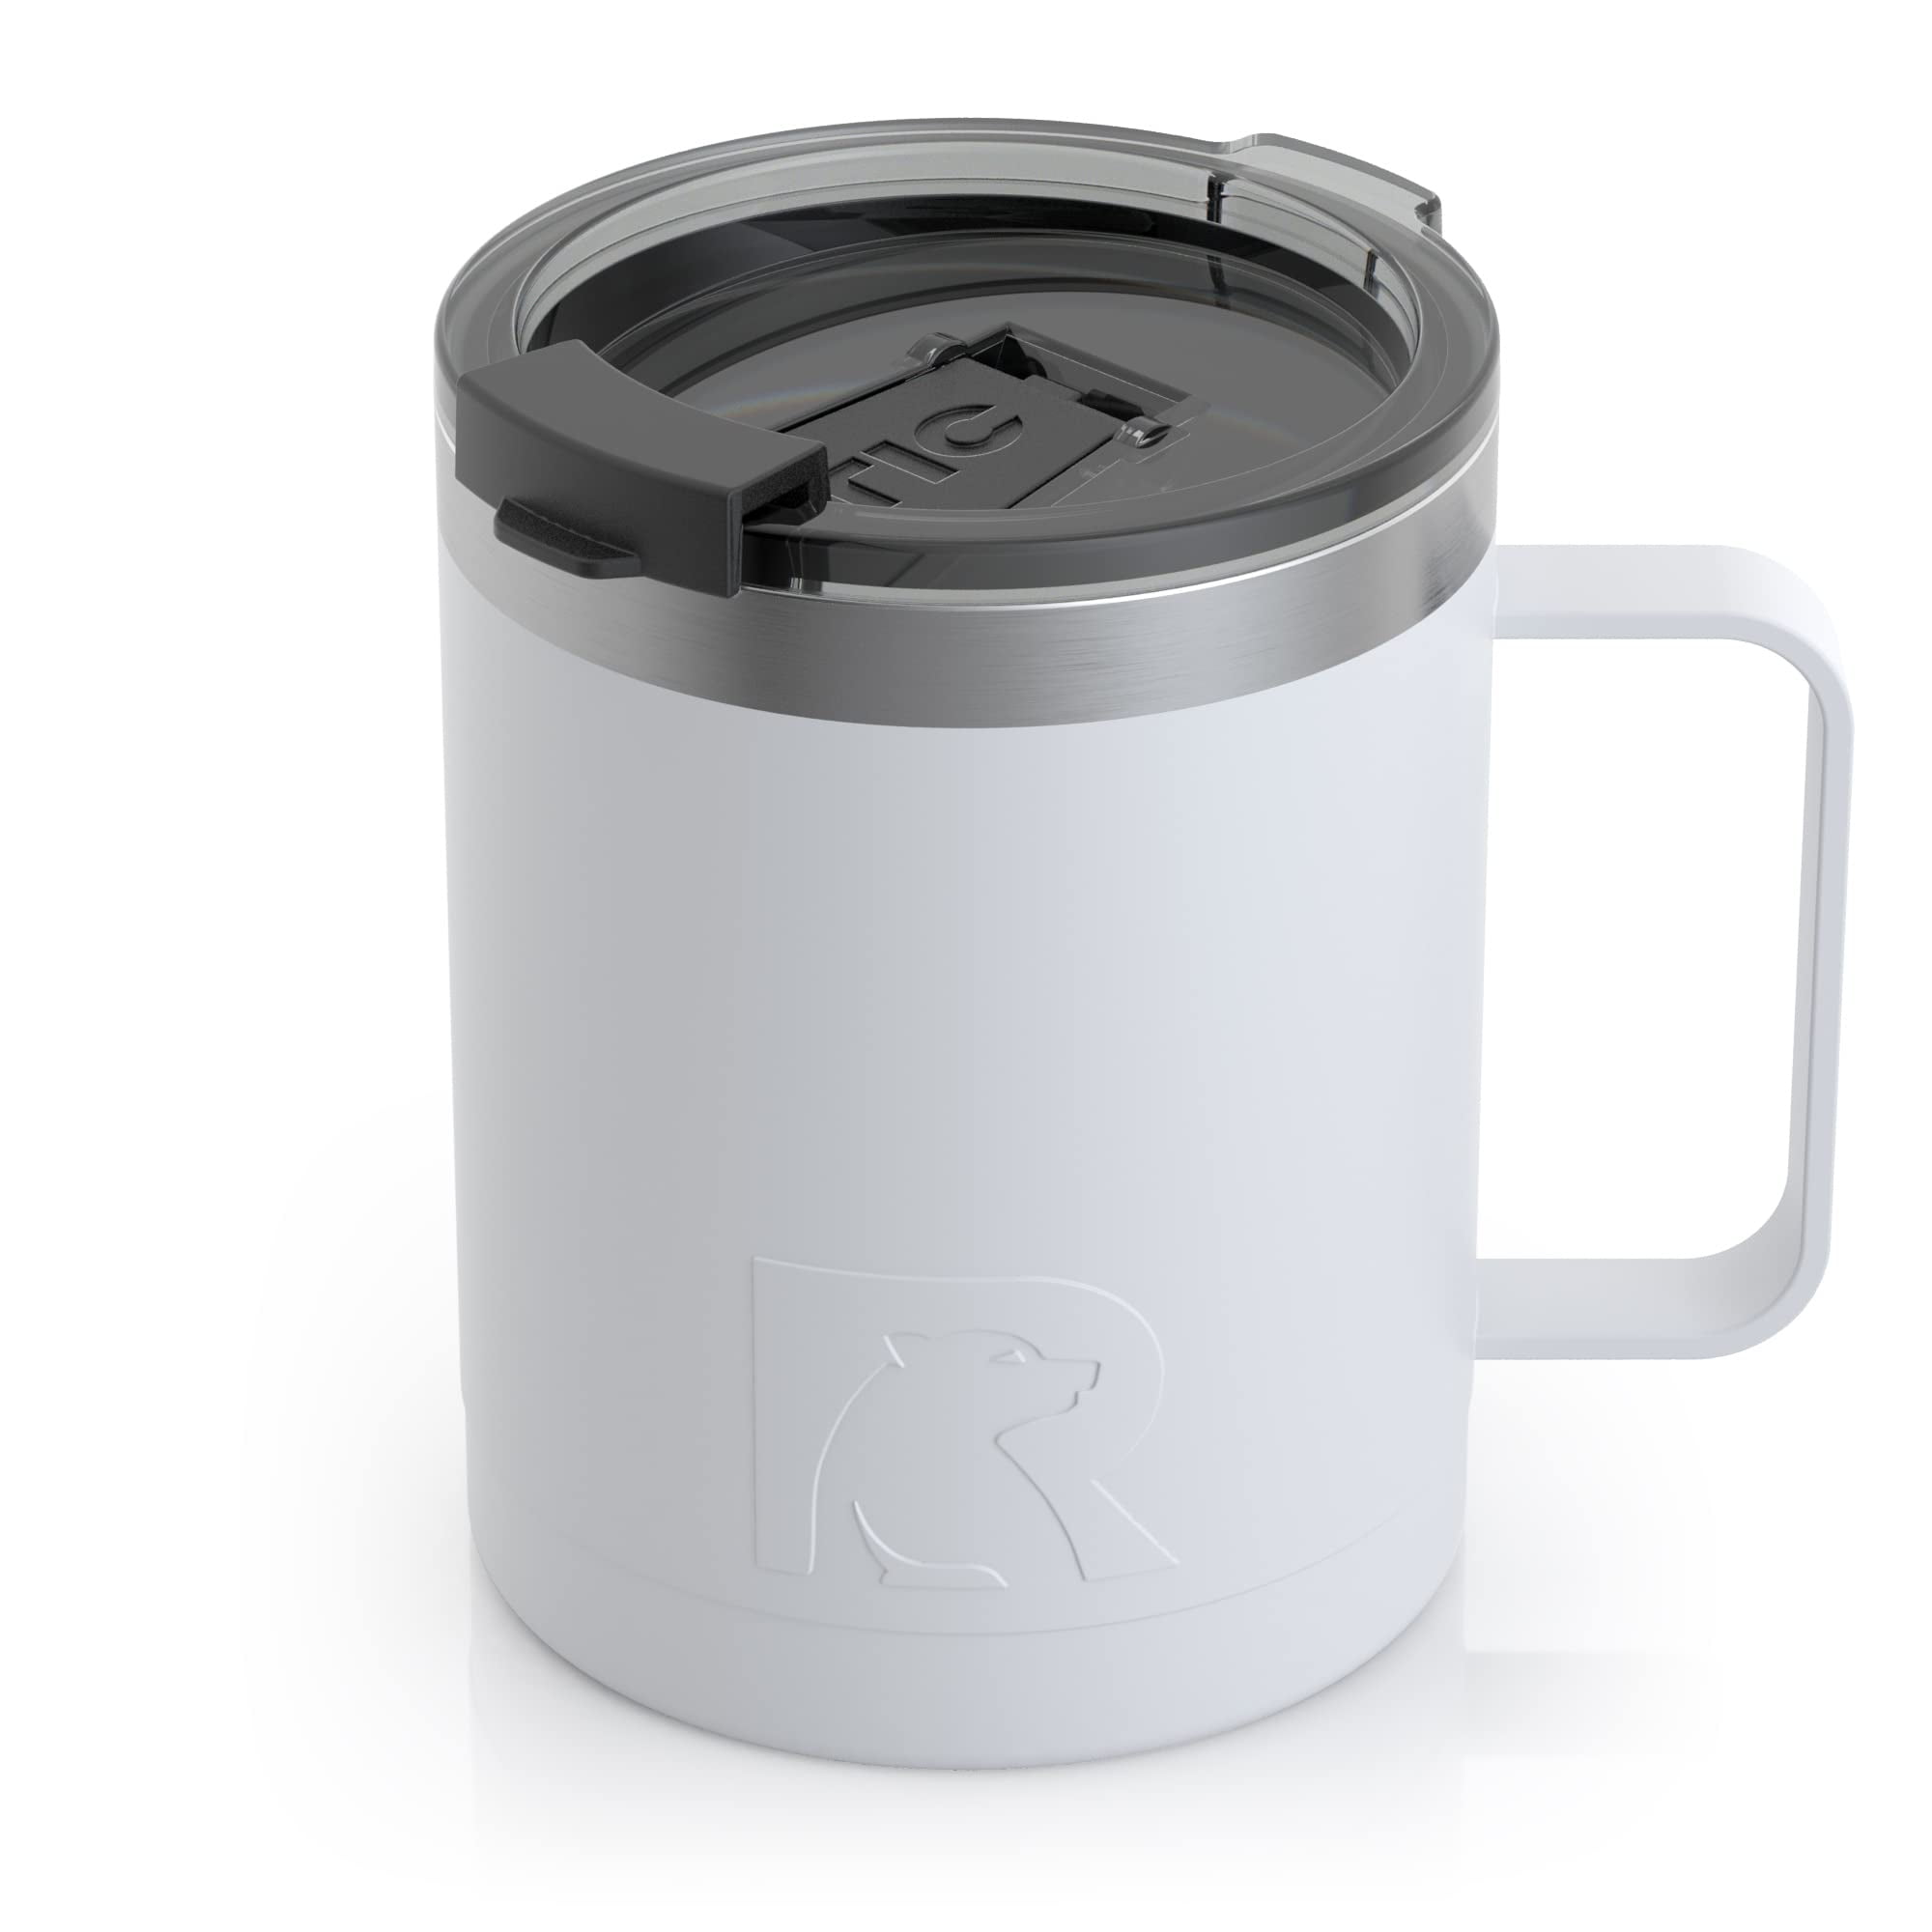 RTIC Coffee Cup - 12 oz.